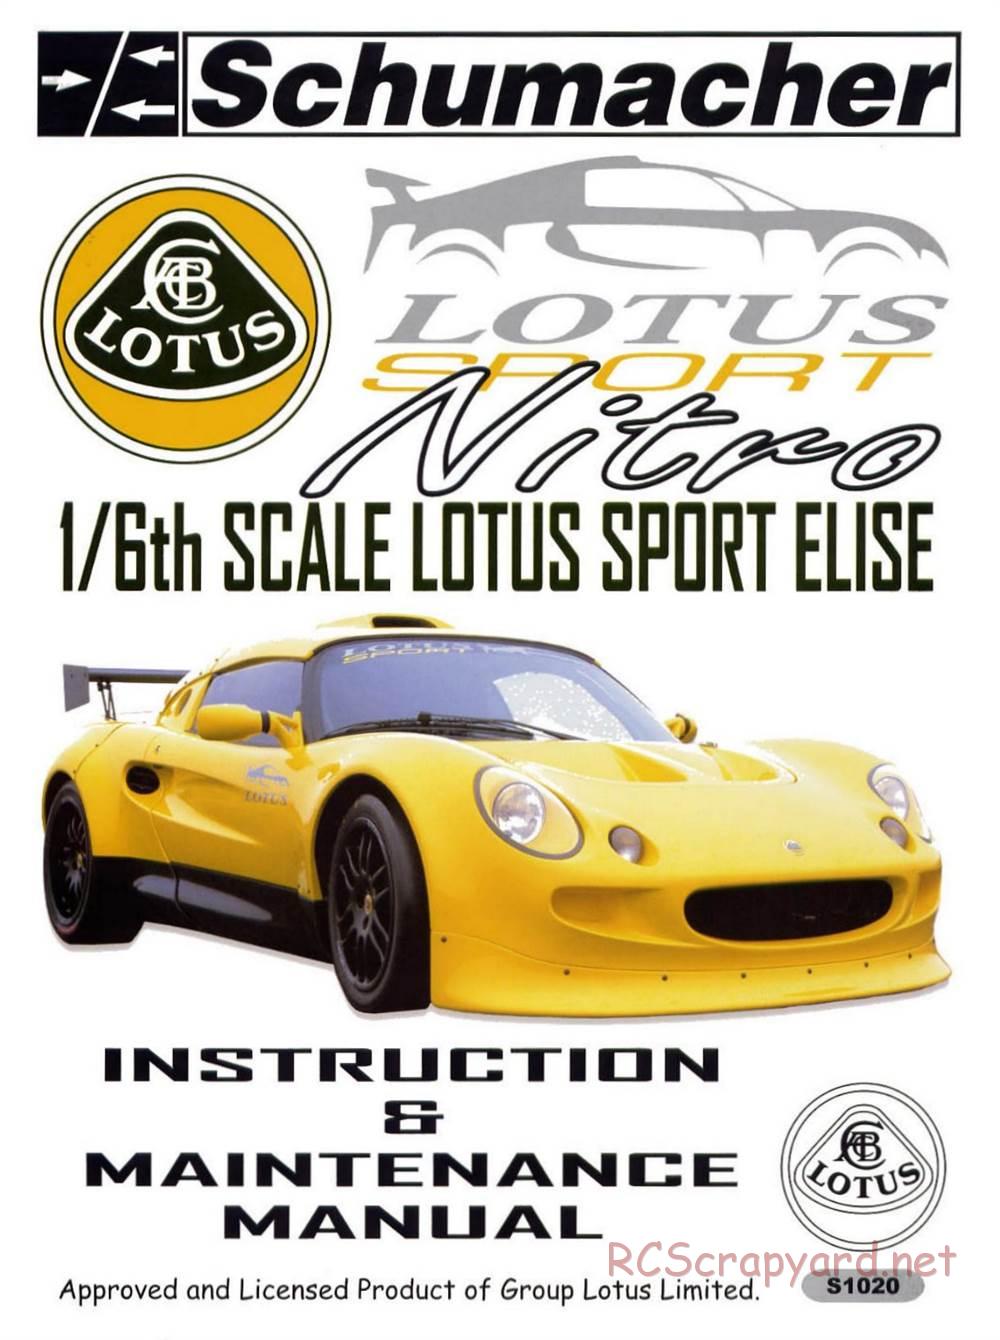 Schumacher - Big 6 Lotus Nitro - Manual - Page 1